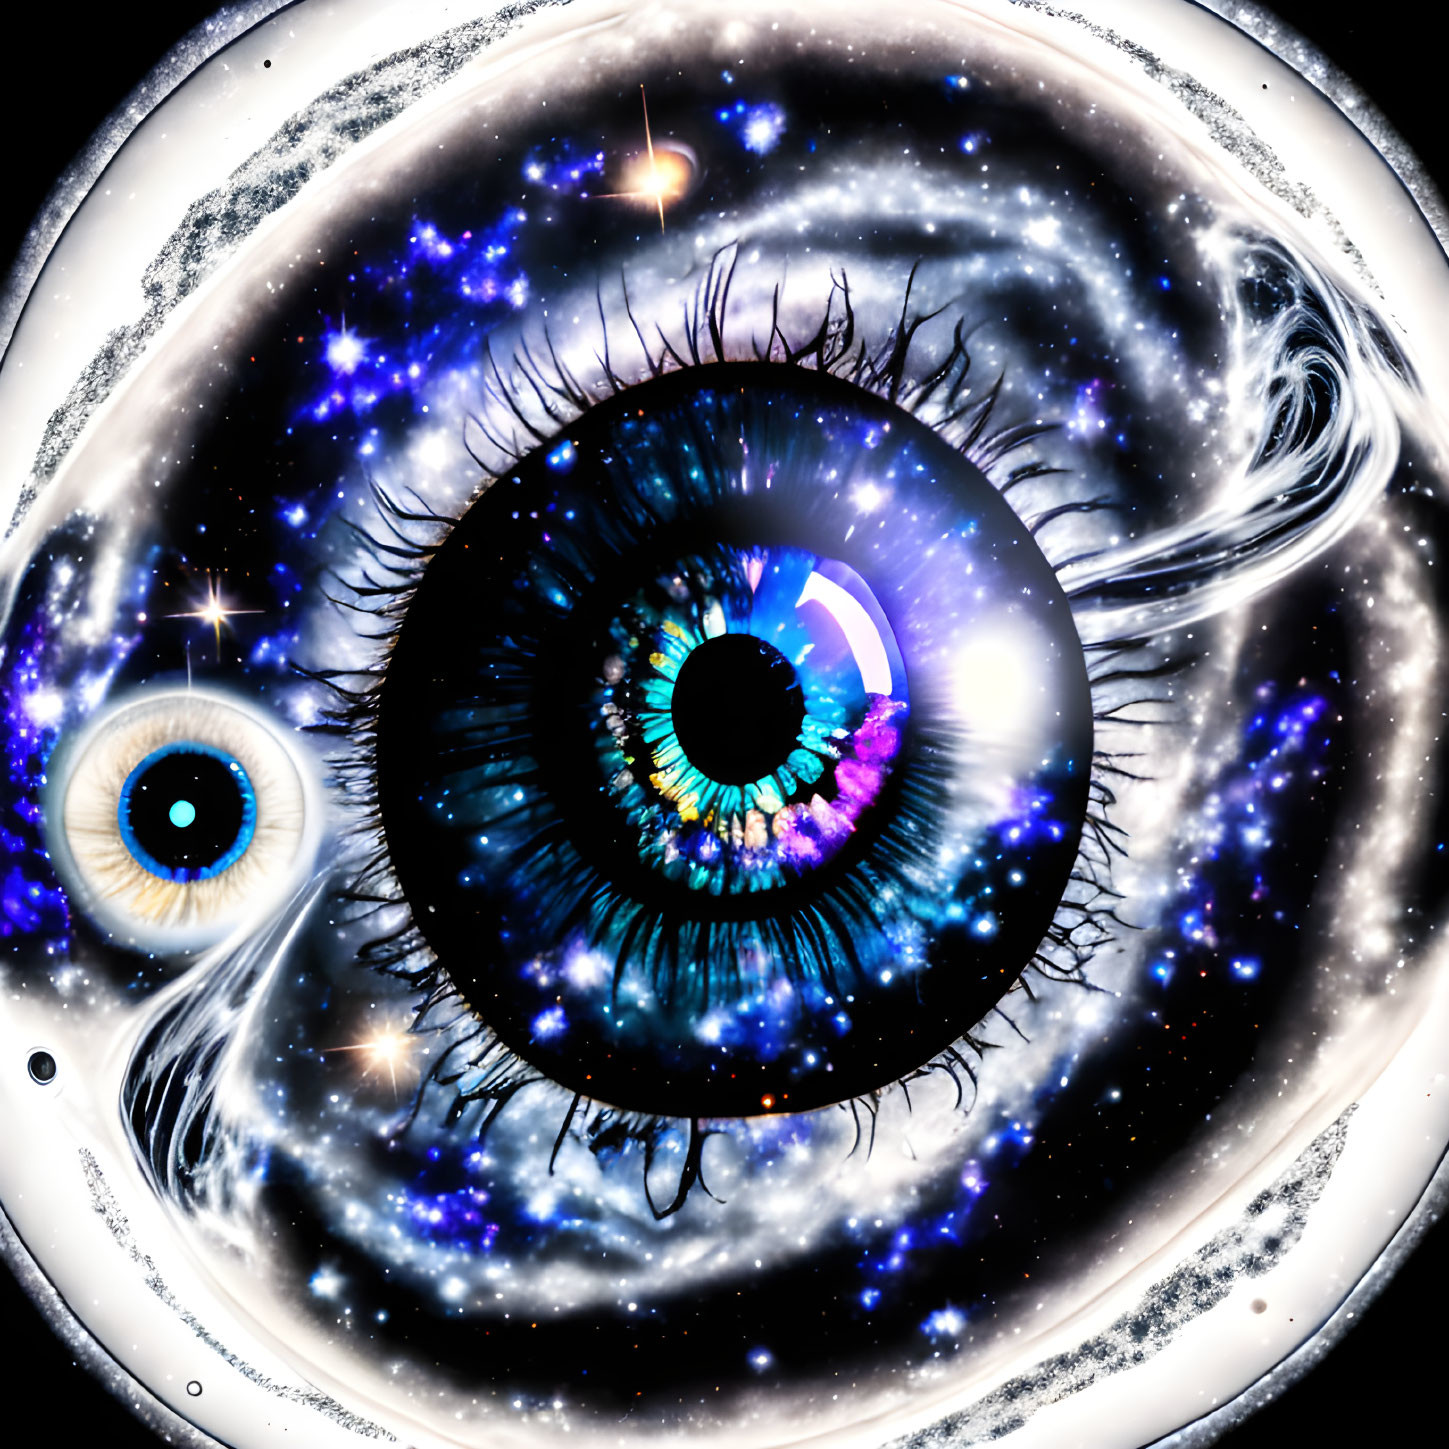 Surreal digital artwork: Galaxy-themed eye with cosmic elements